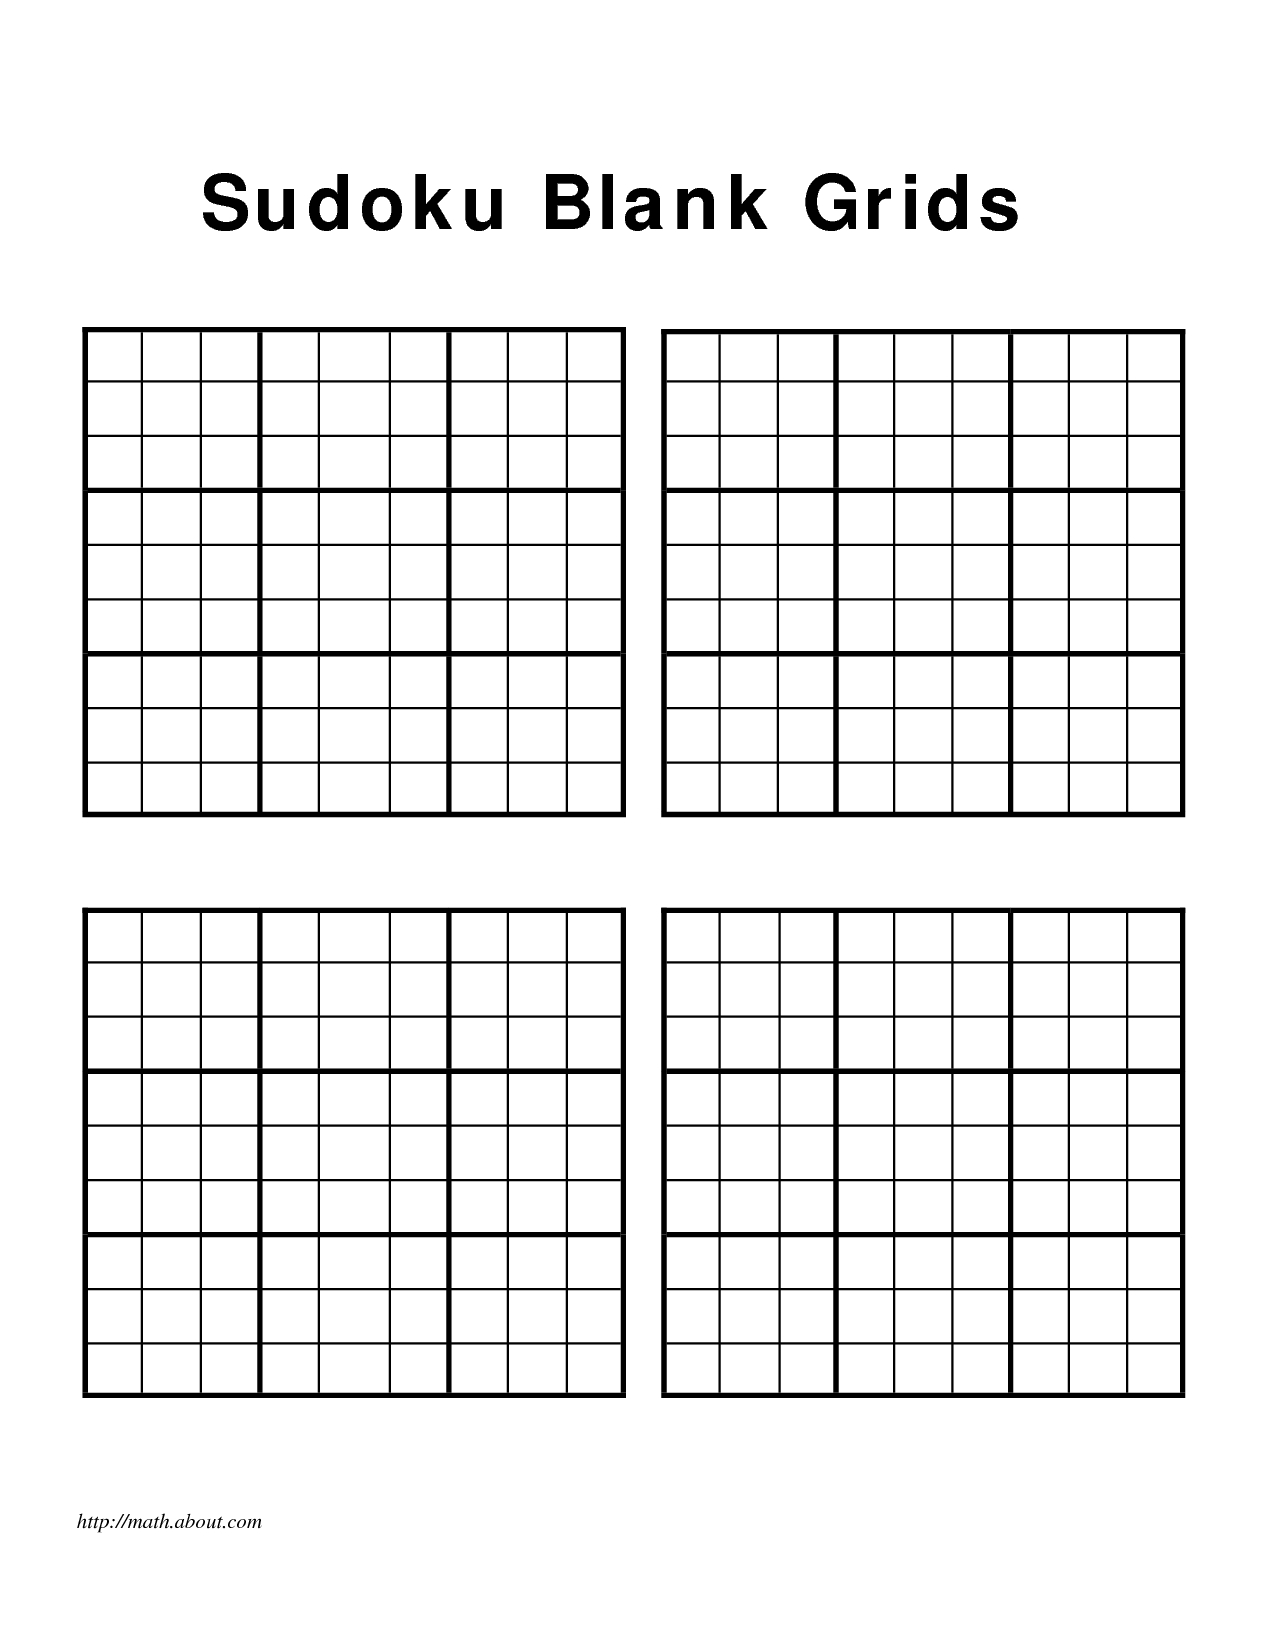 Sudoku Grids Pdf - Dalep.midnightpig.co